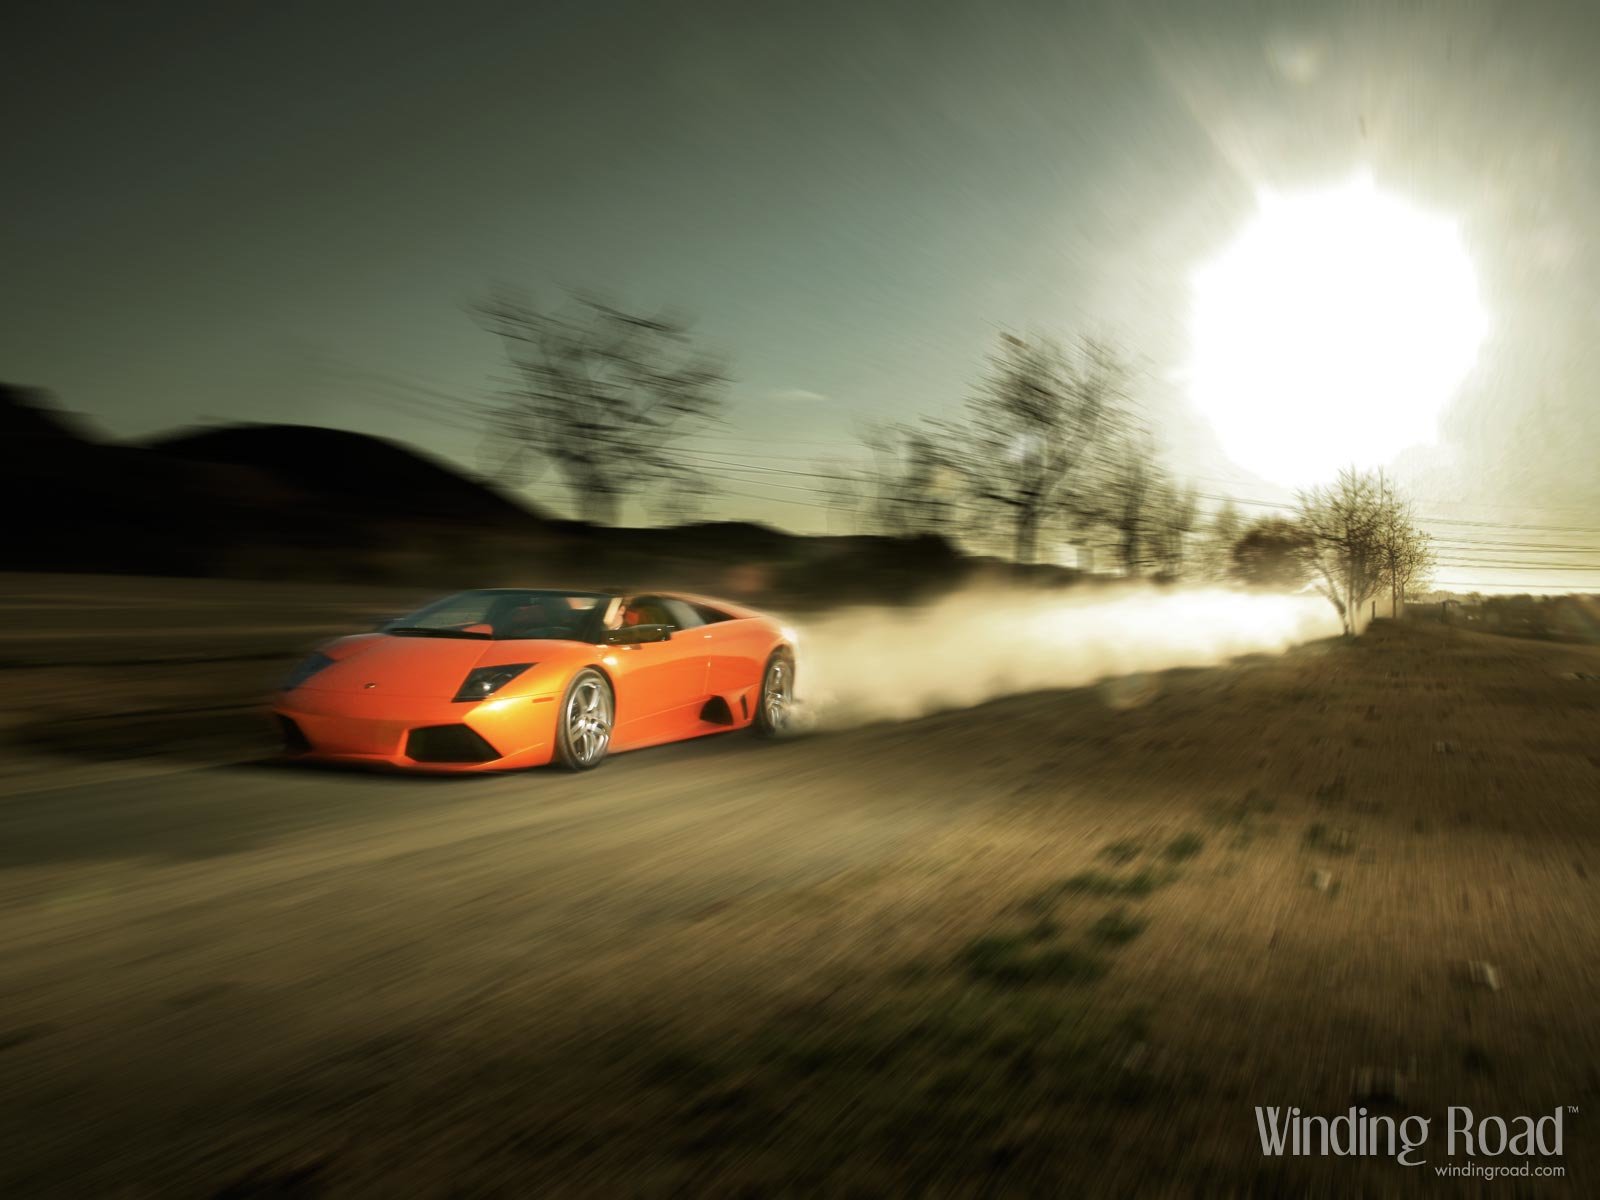 Best Lamborghini Murcielago background ID:155271 for High Resolution hd 1600x1200 PC